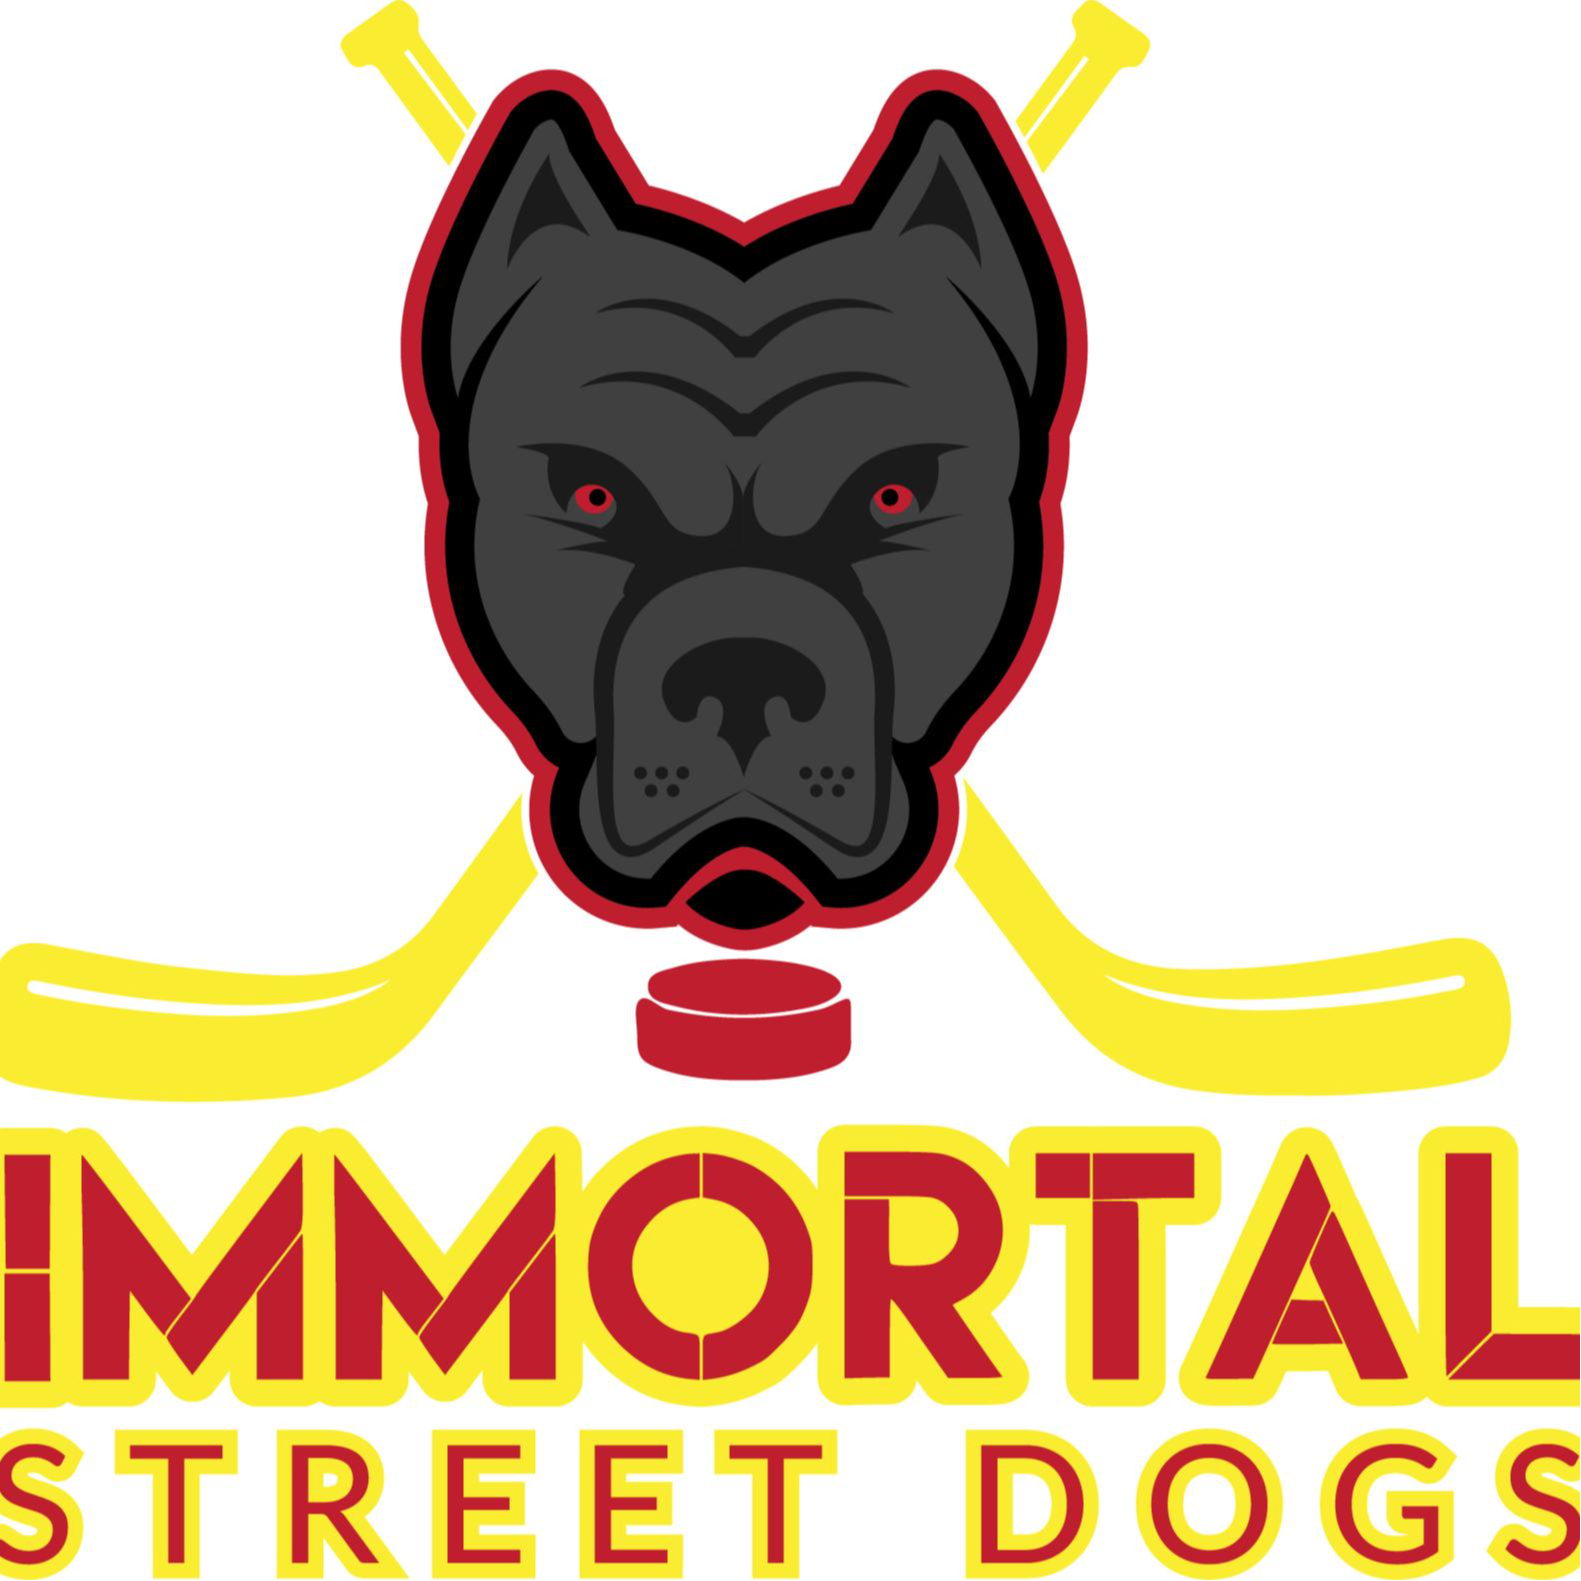 Immortal Street Dogs